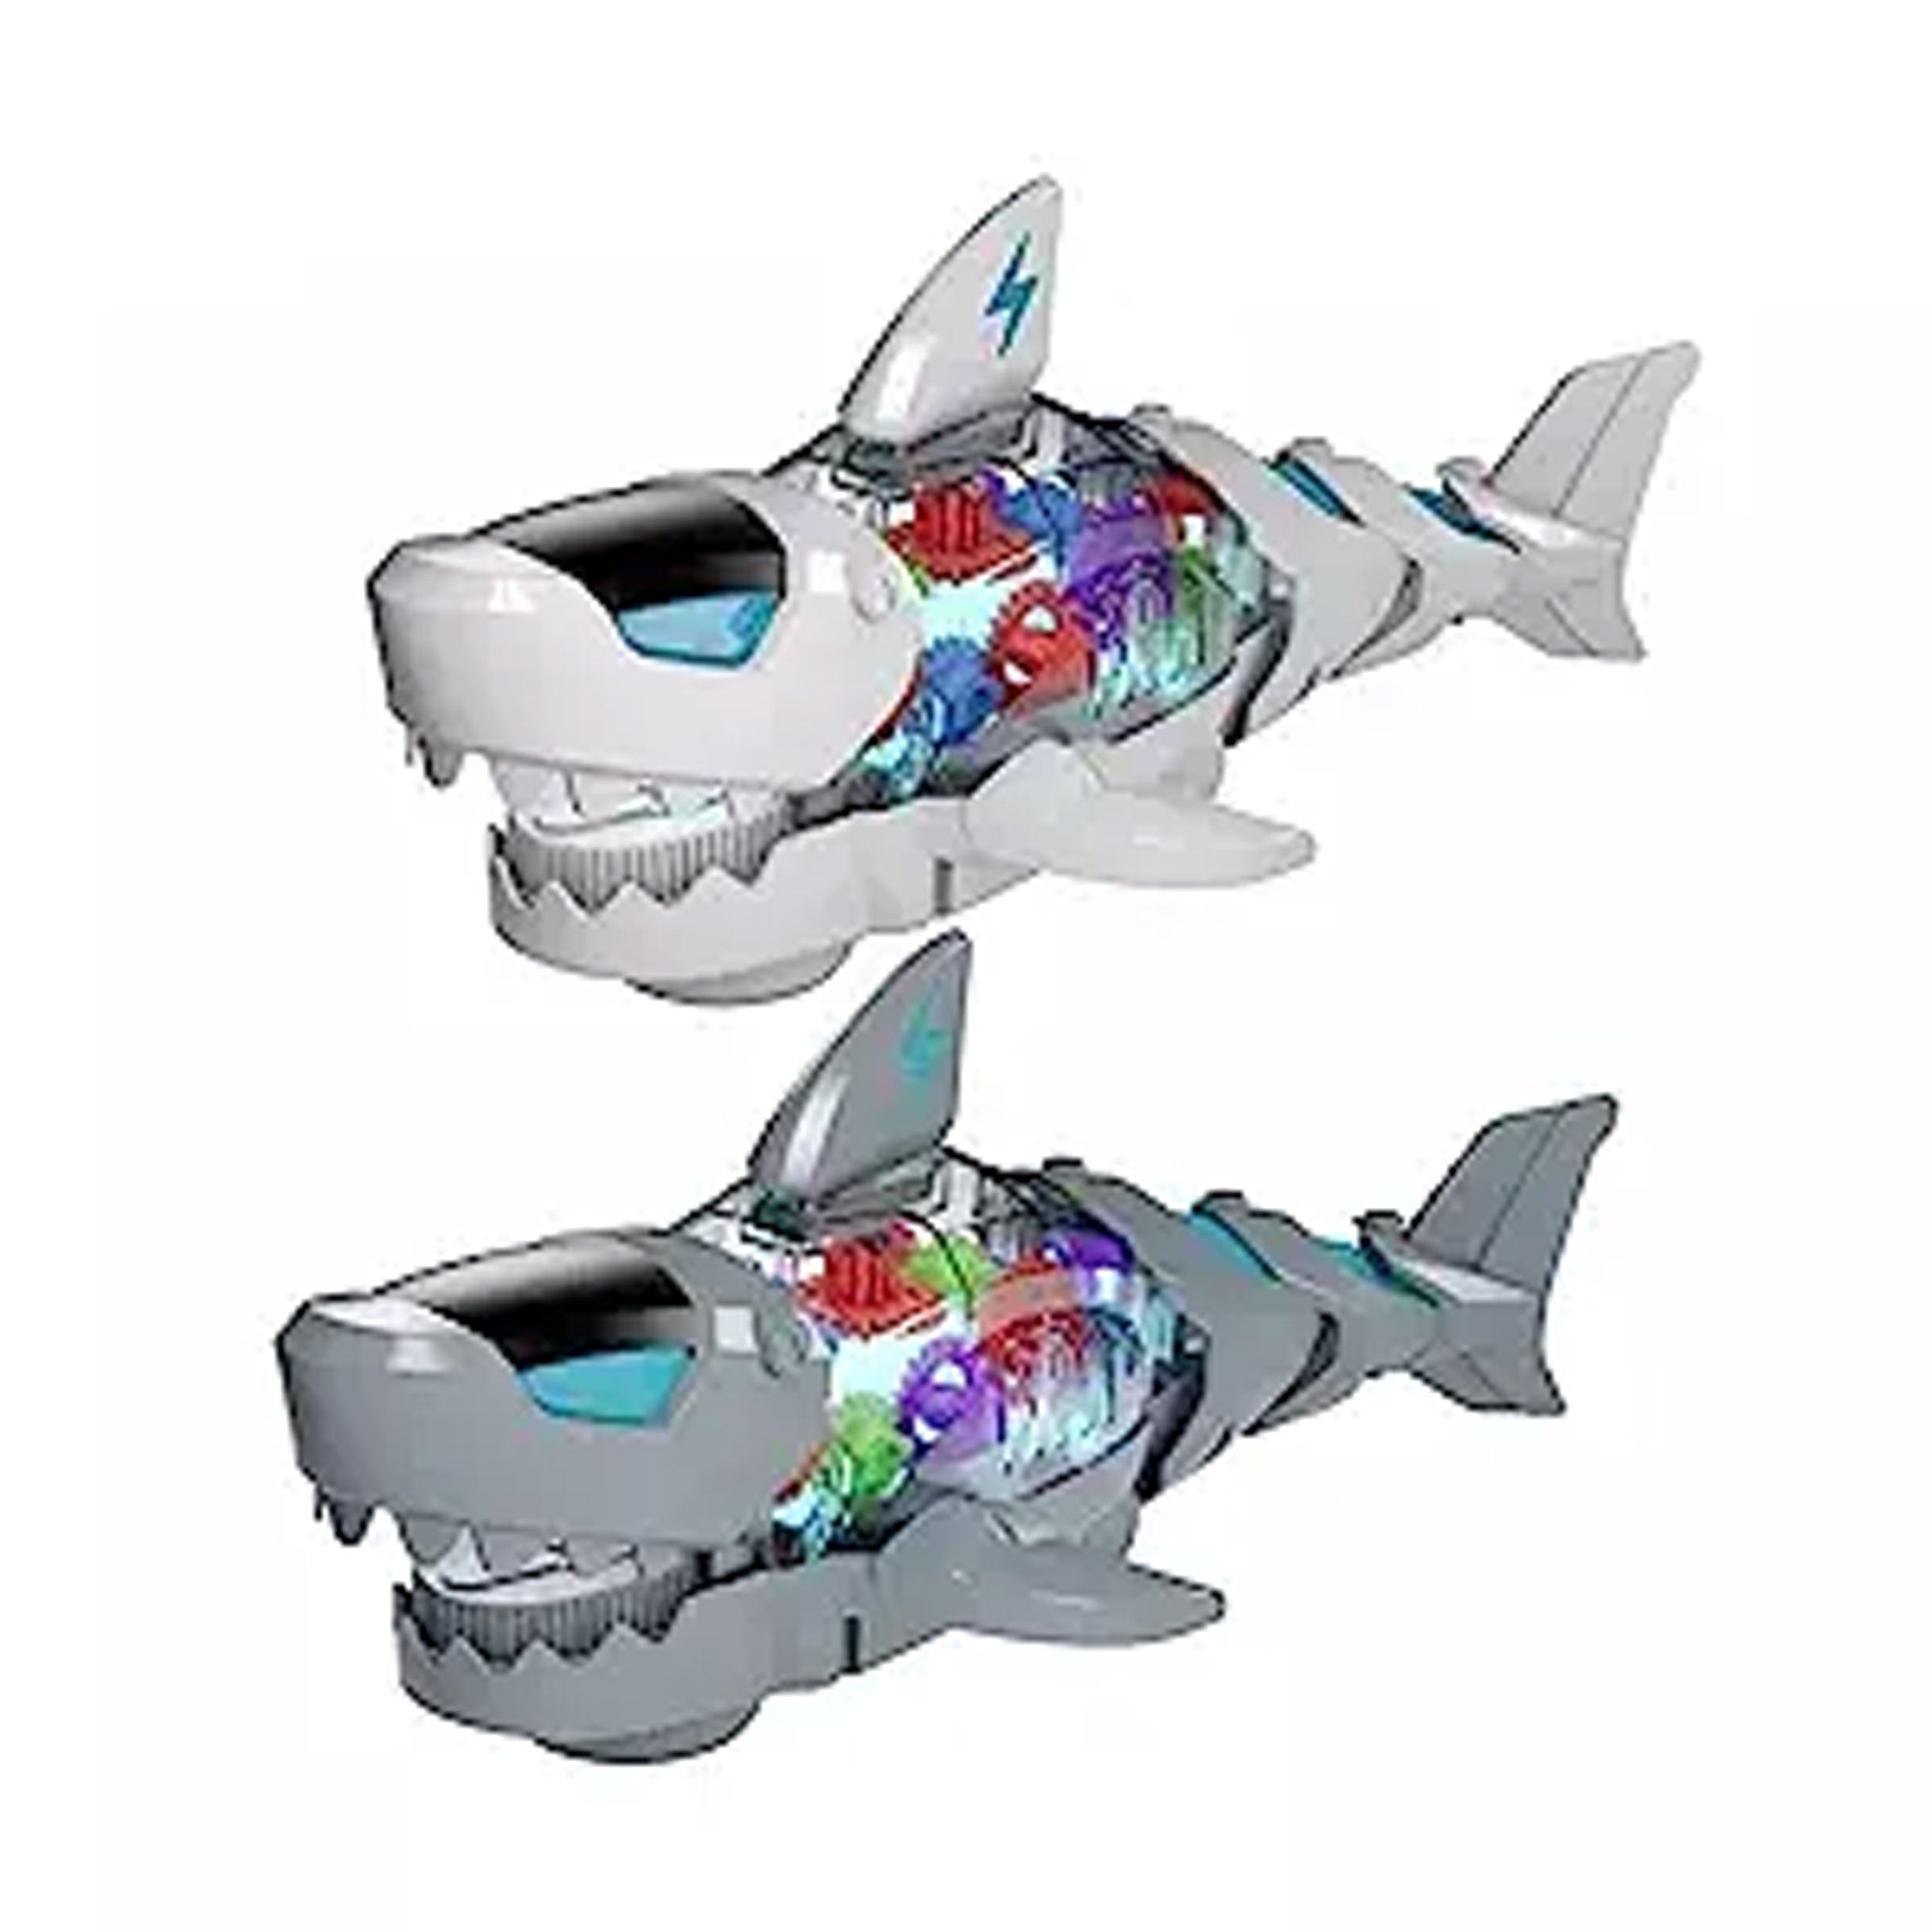 Wholesale Electronic Toy Robot Sharks MOQ -6 pcs